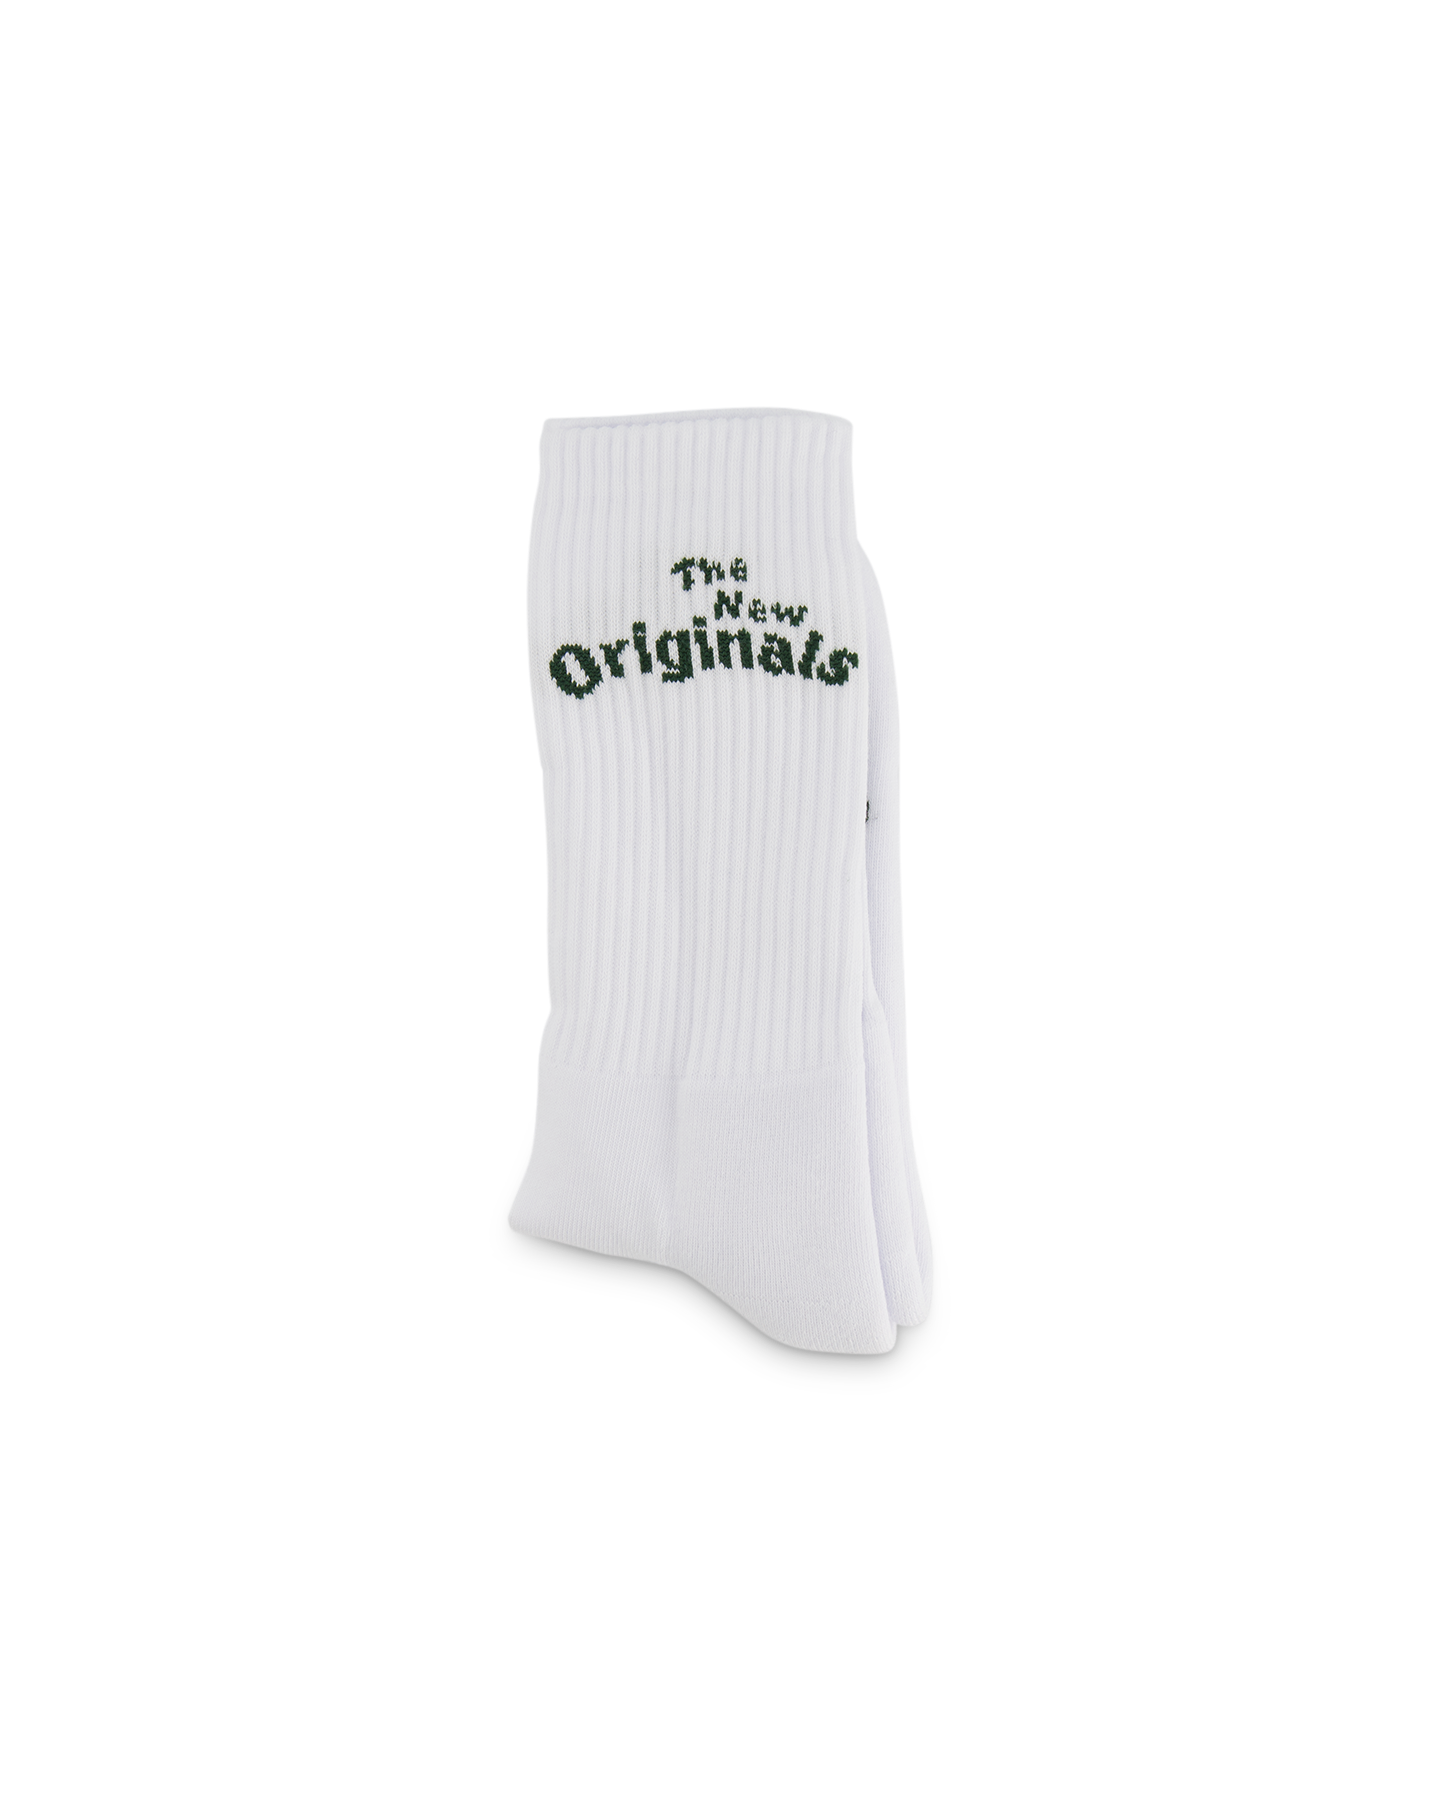 The New Originals Workman Socks White 1